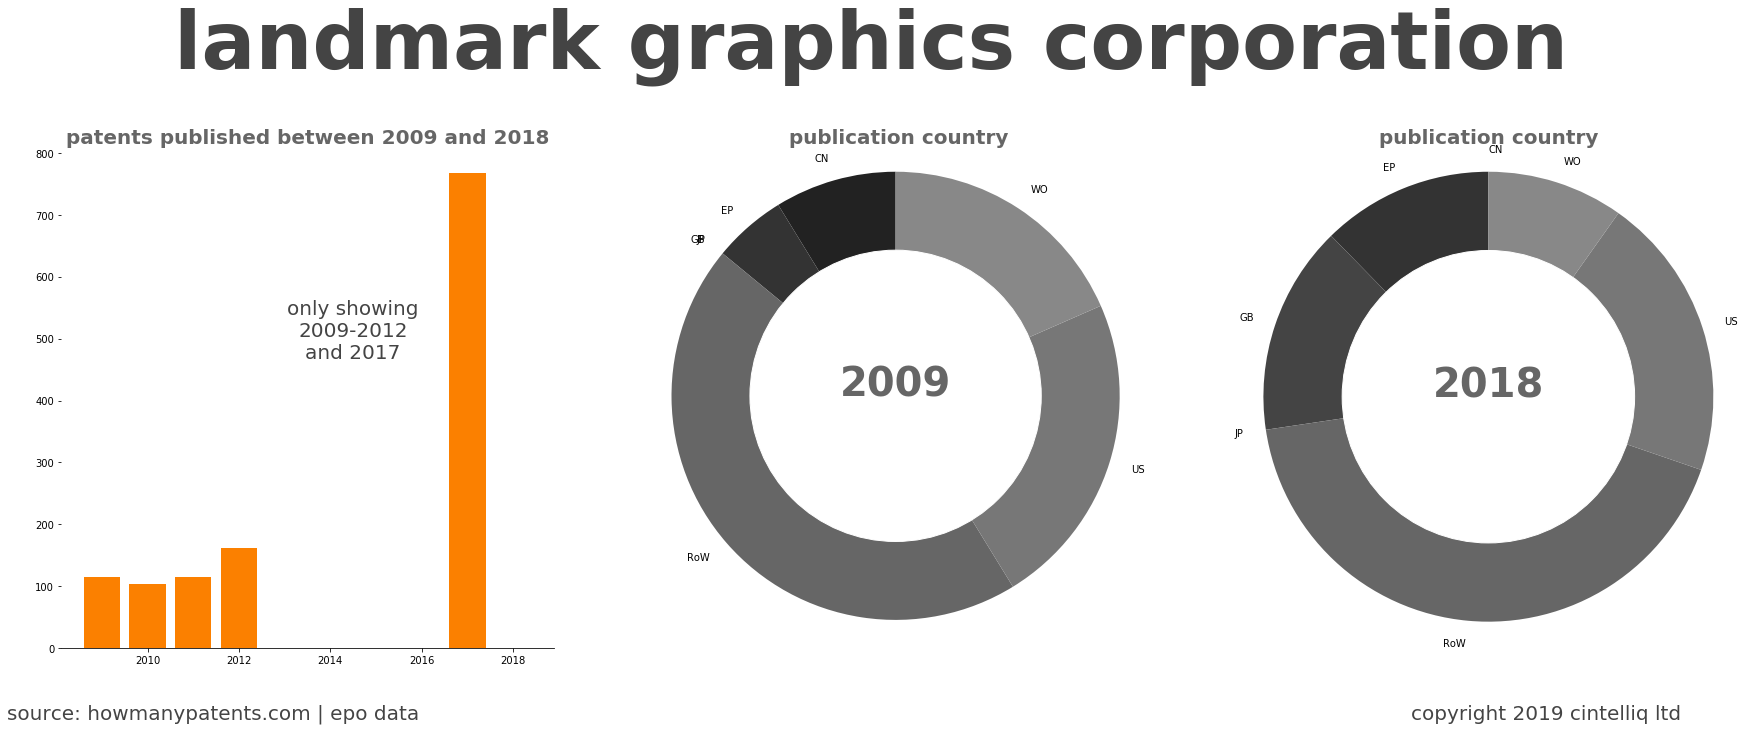 summary of patents for Landmark Graphics Corporation